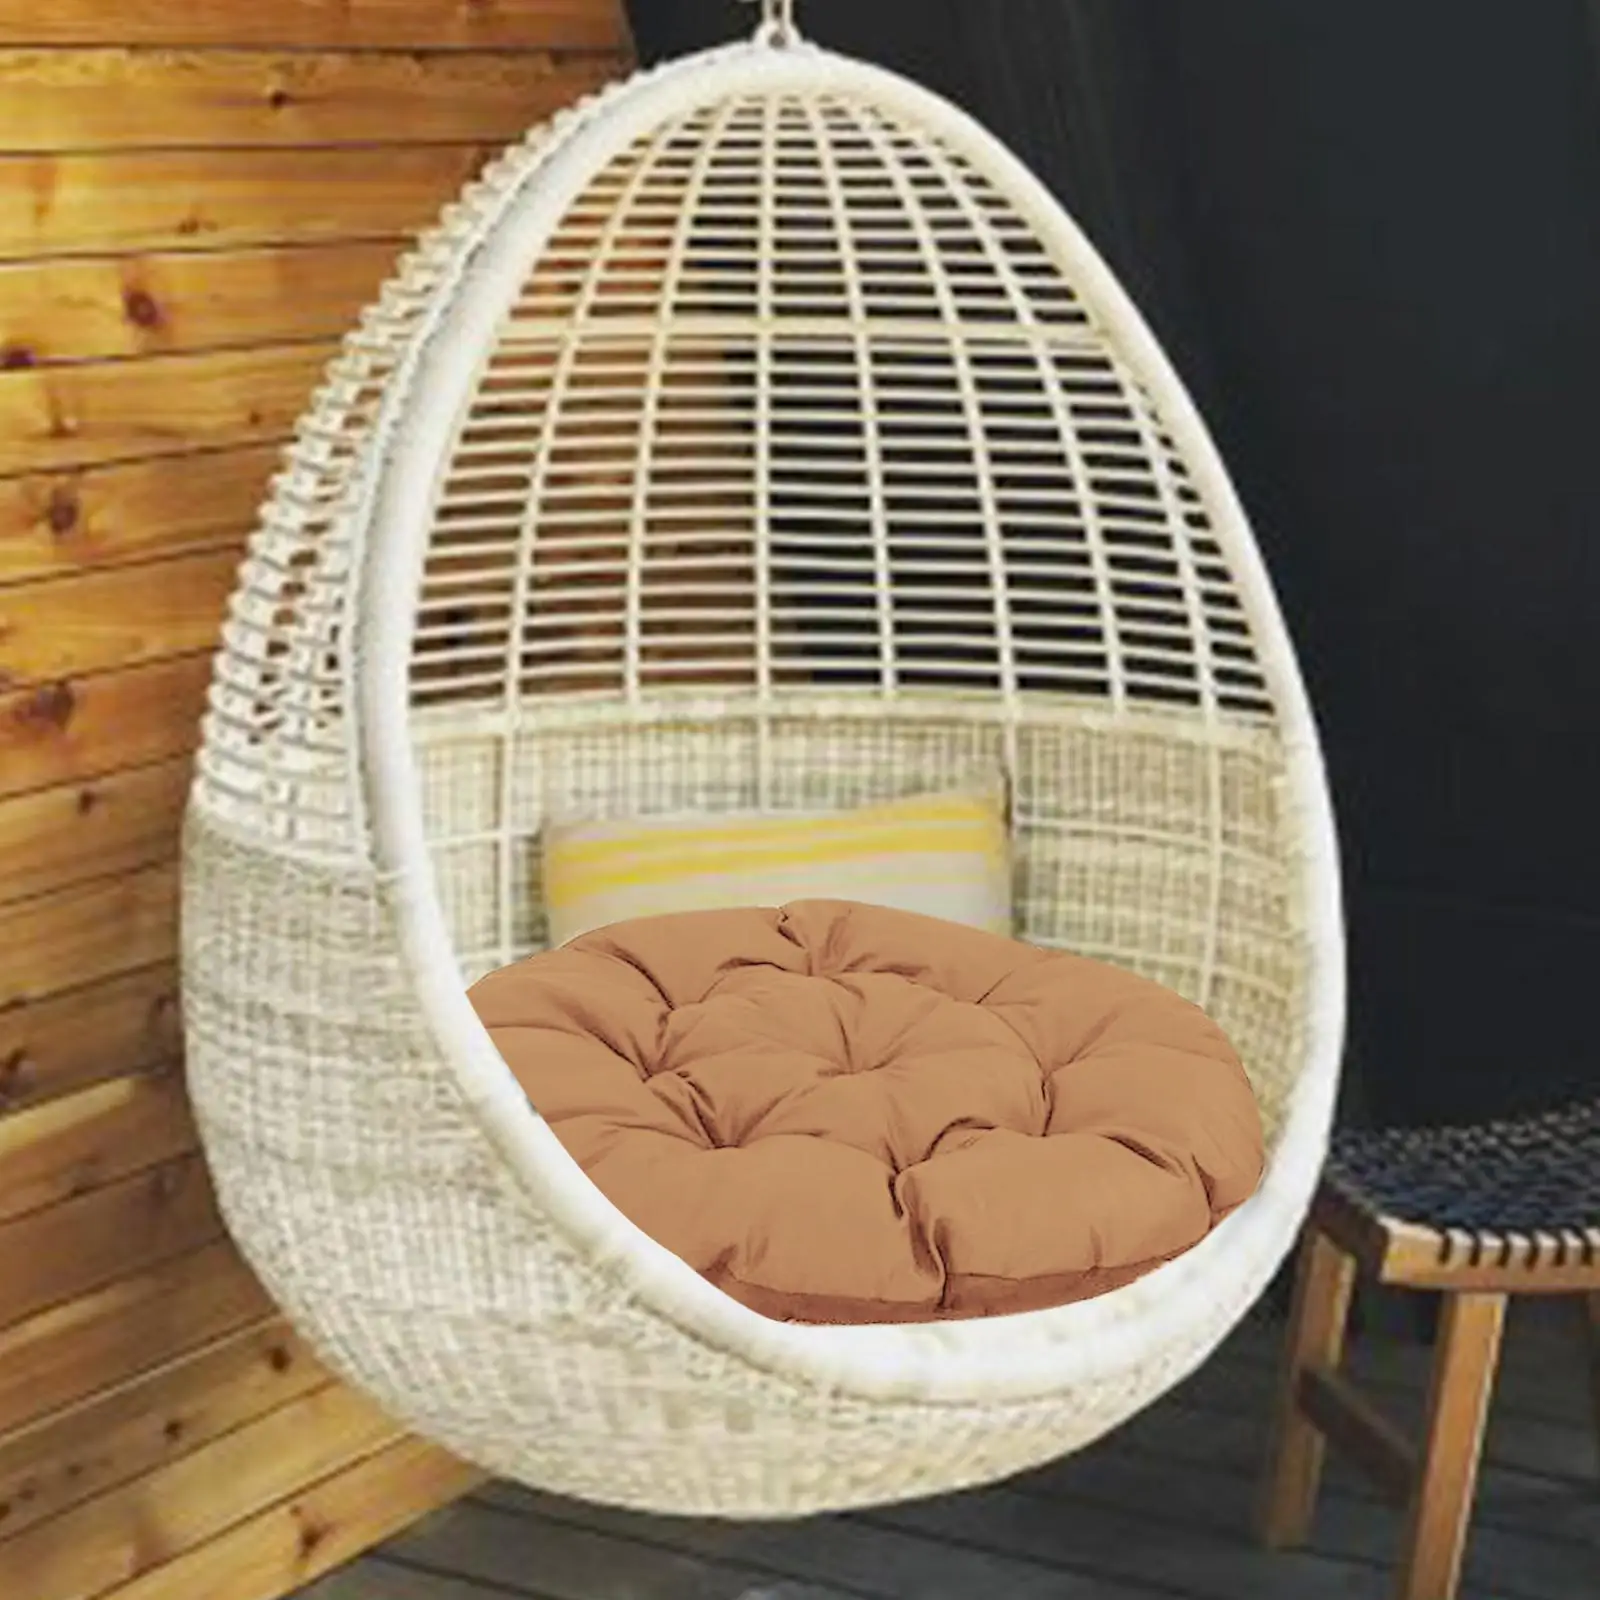 60x60cm Patio Seat Cushion Chair Pads Outdoor Seat Cushion for Hanging Chair Swing Chair Rattan Chairs Indoor Outdoor Hammock